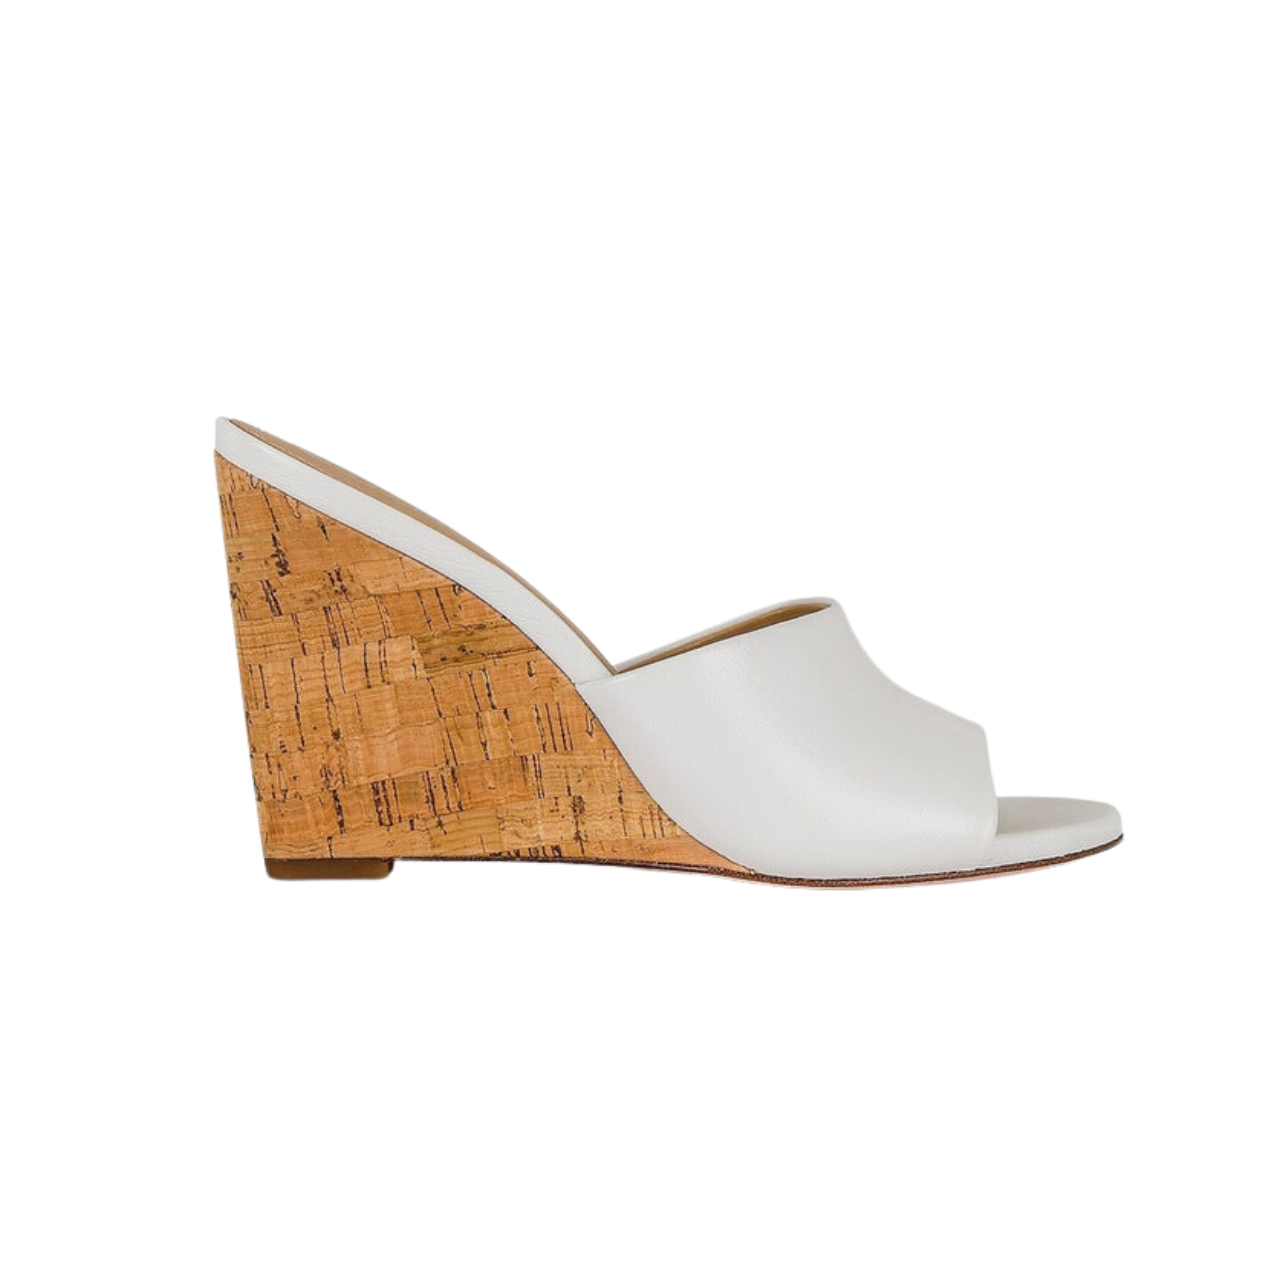 Veronica Beard Dali single sandals